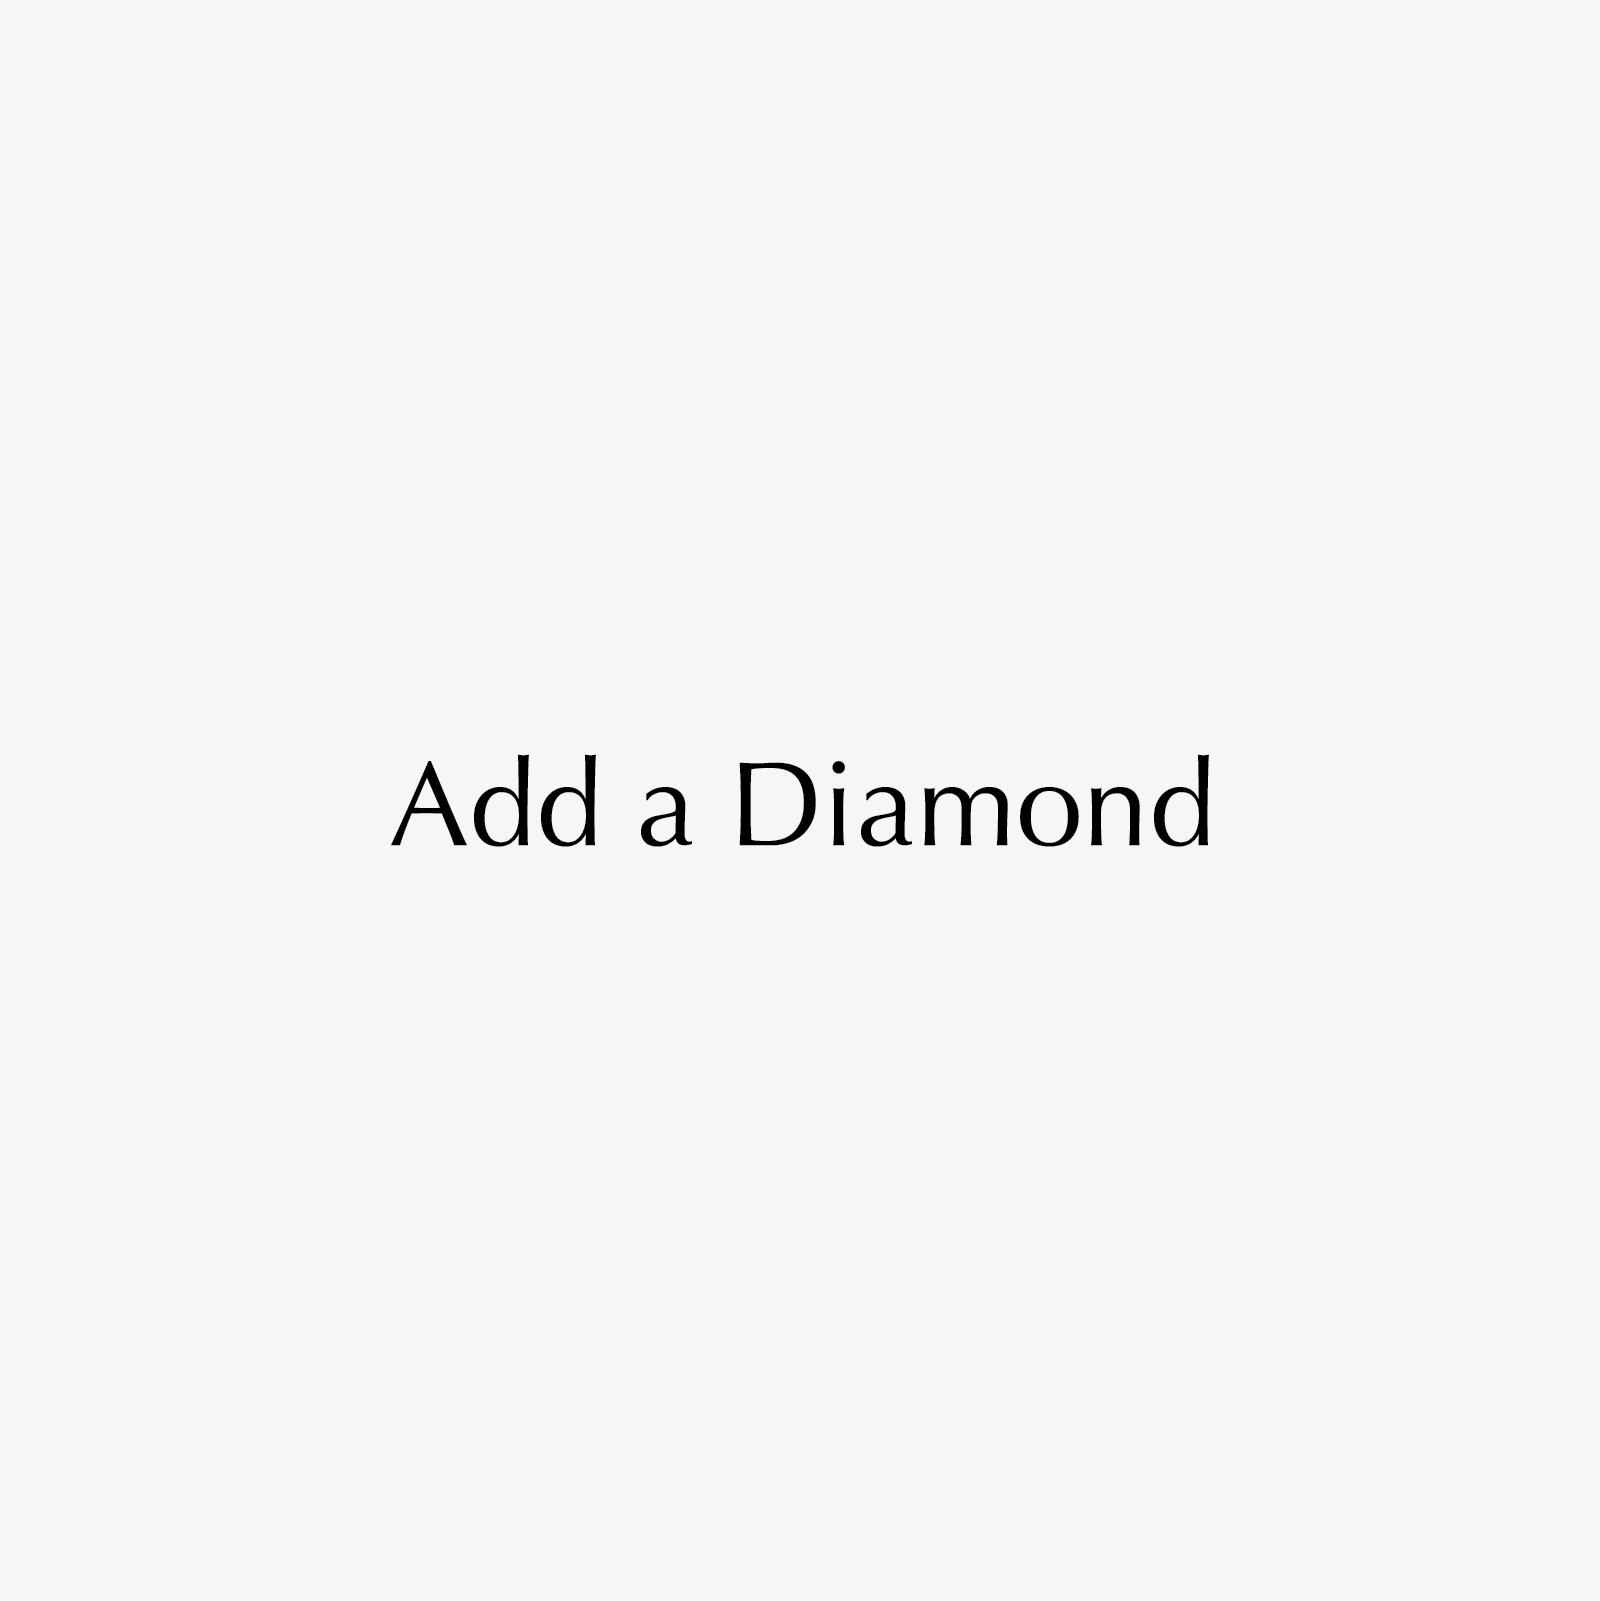 Add a Diamond